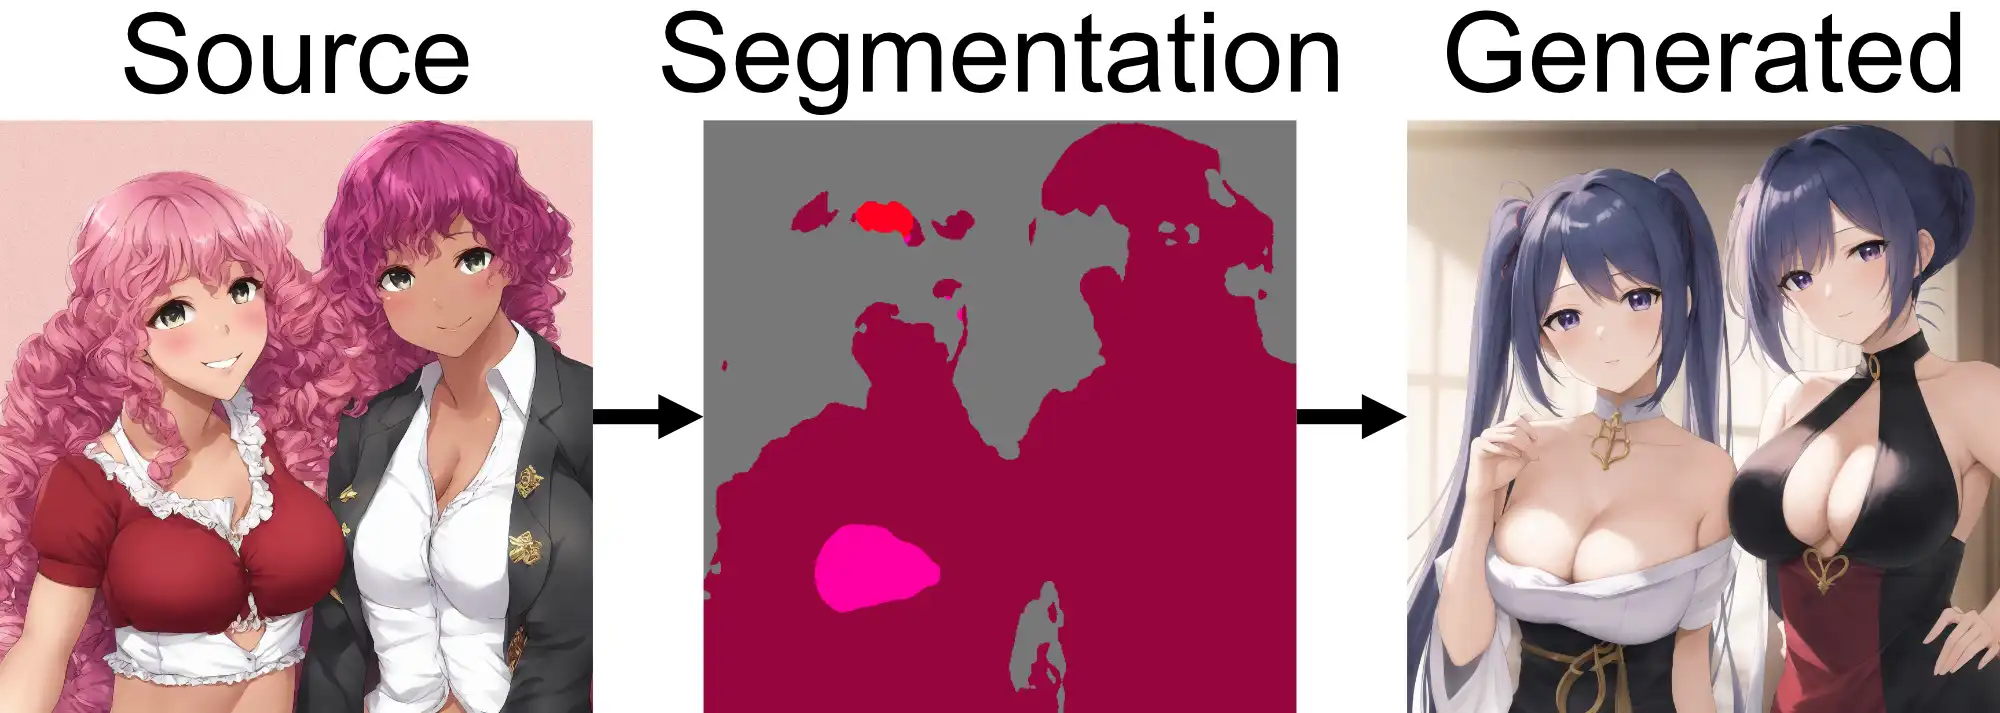 Segmentation model